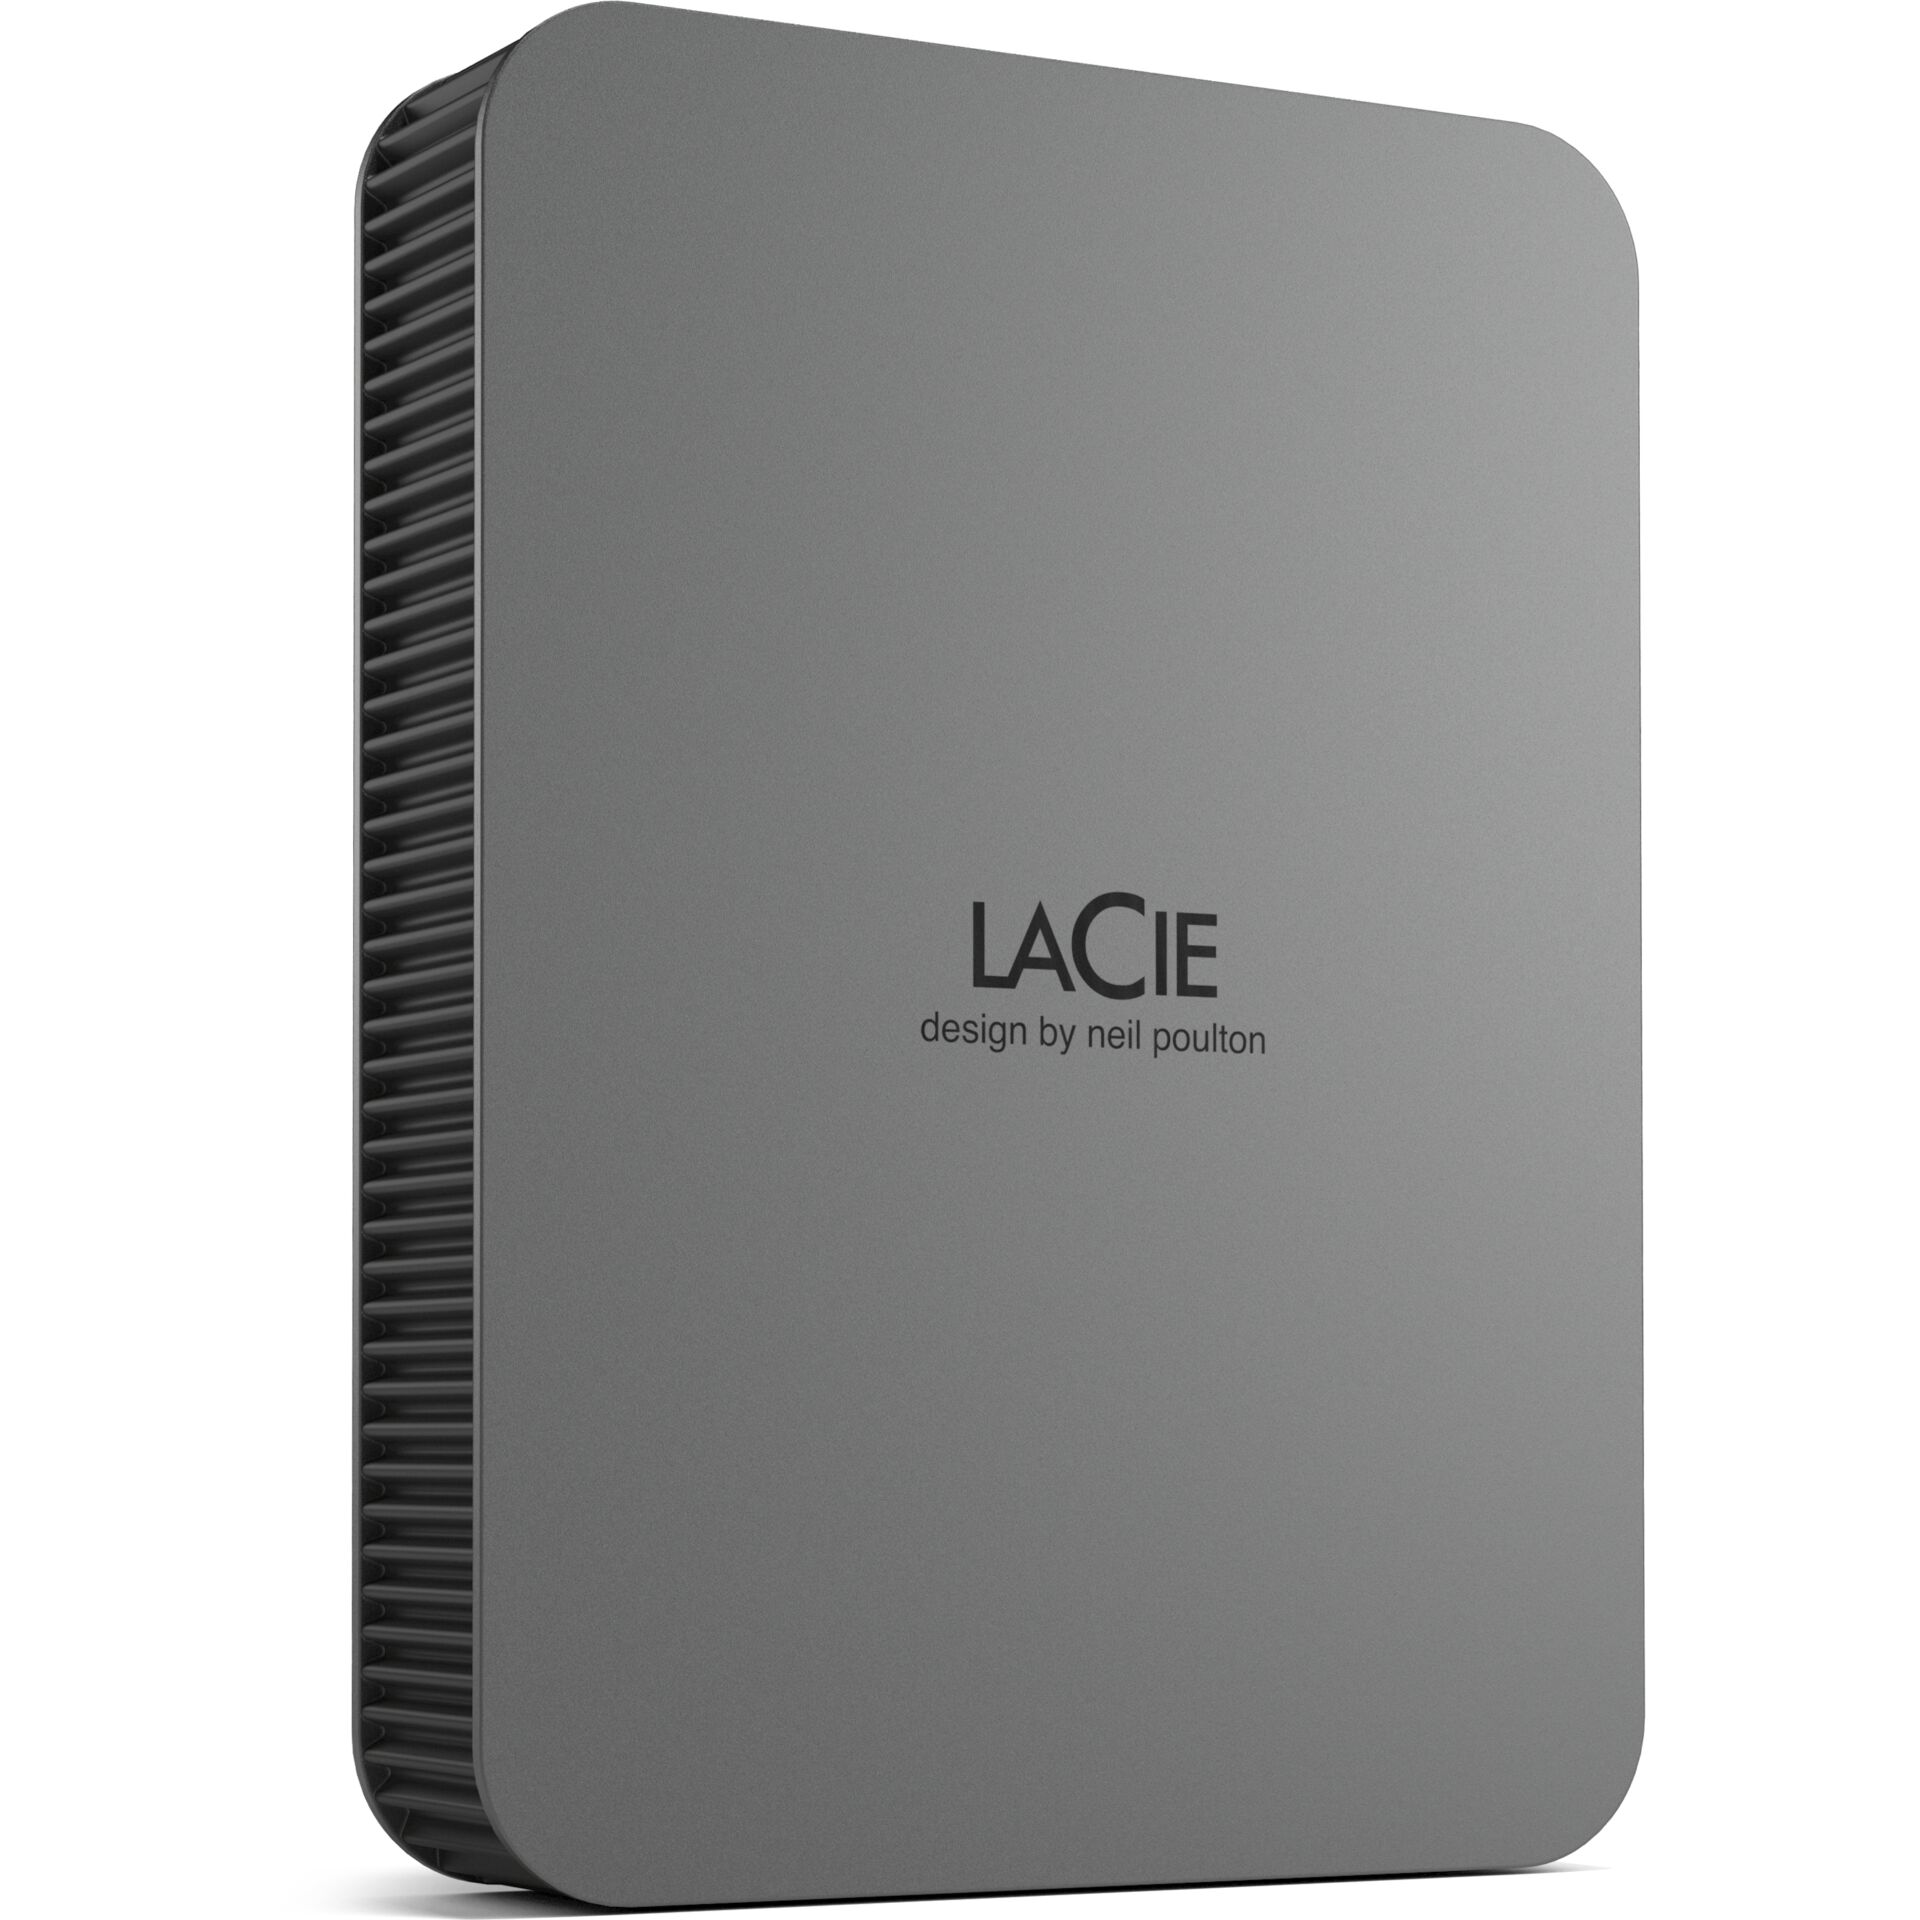 LaCie STLR5000400 Externe Festplatte 5 TB Grau